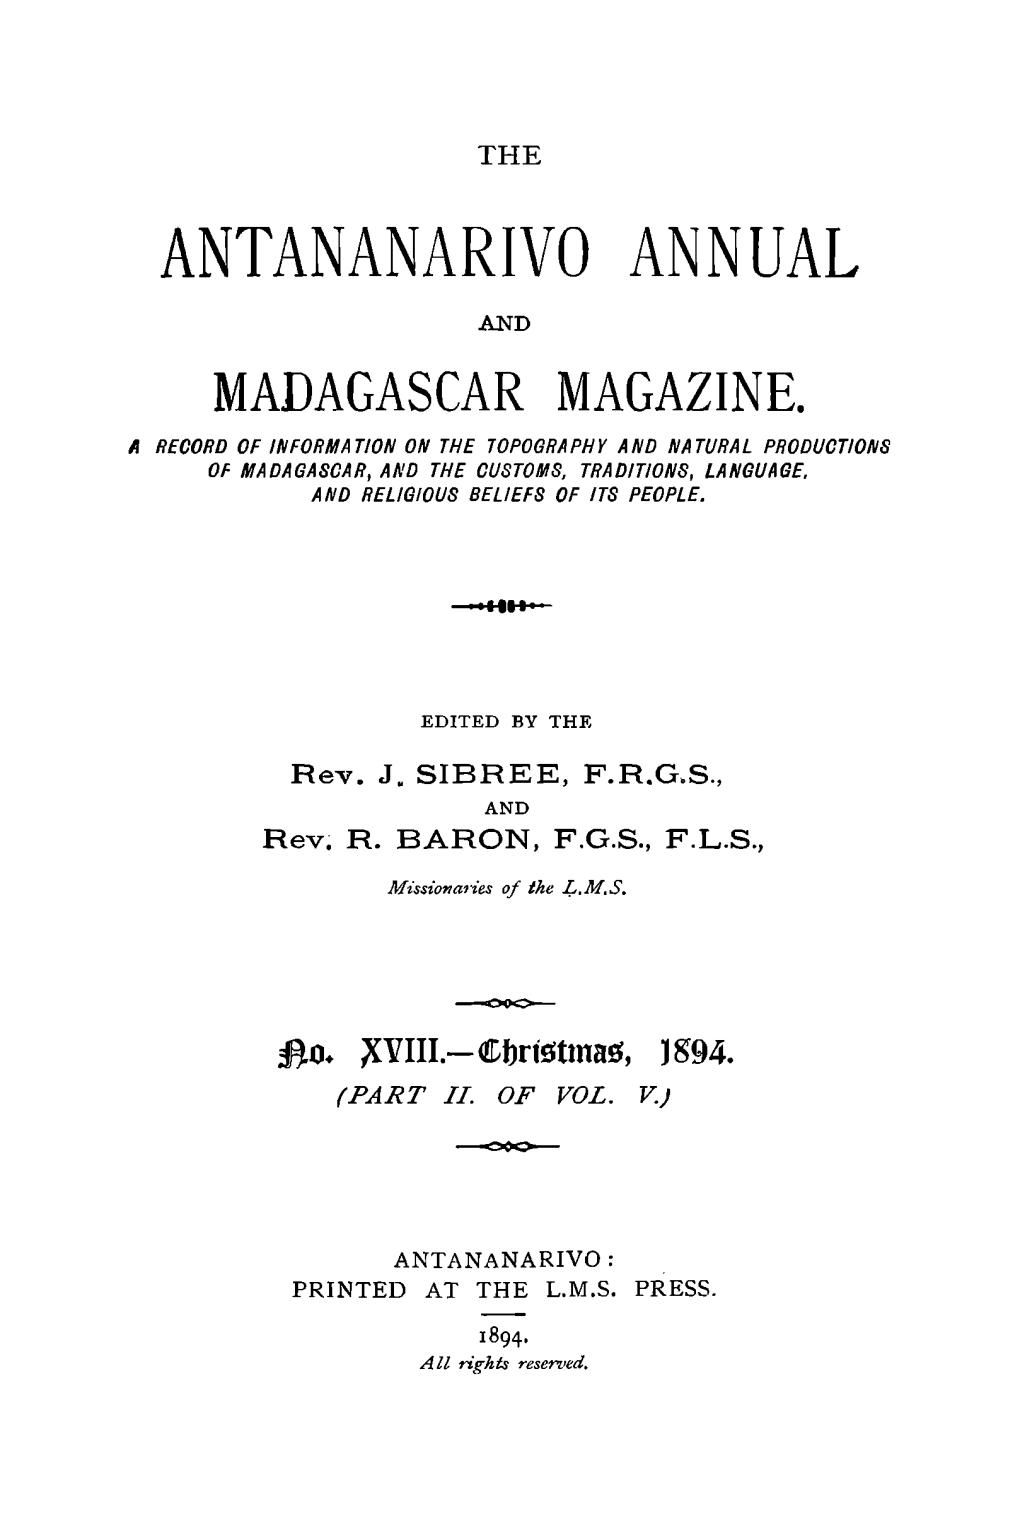 Antananarivo Annual and Madagascar Magazine